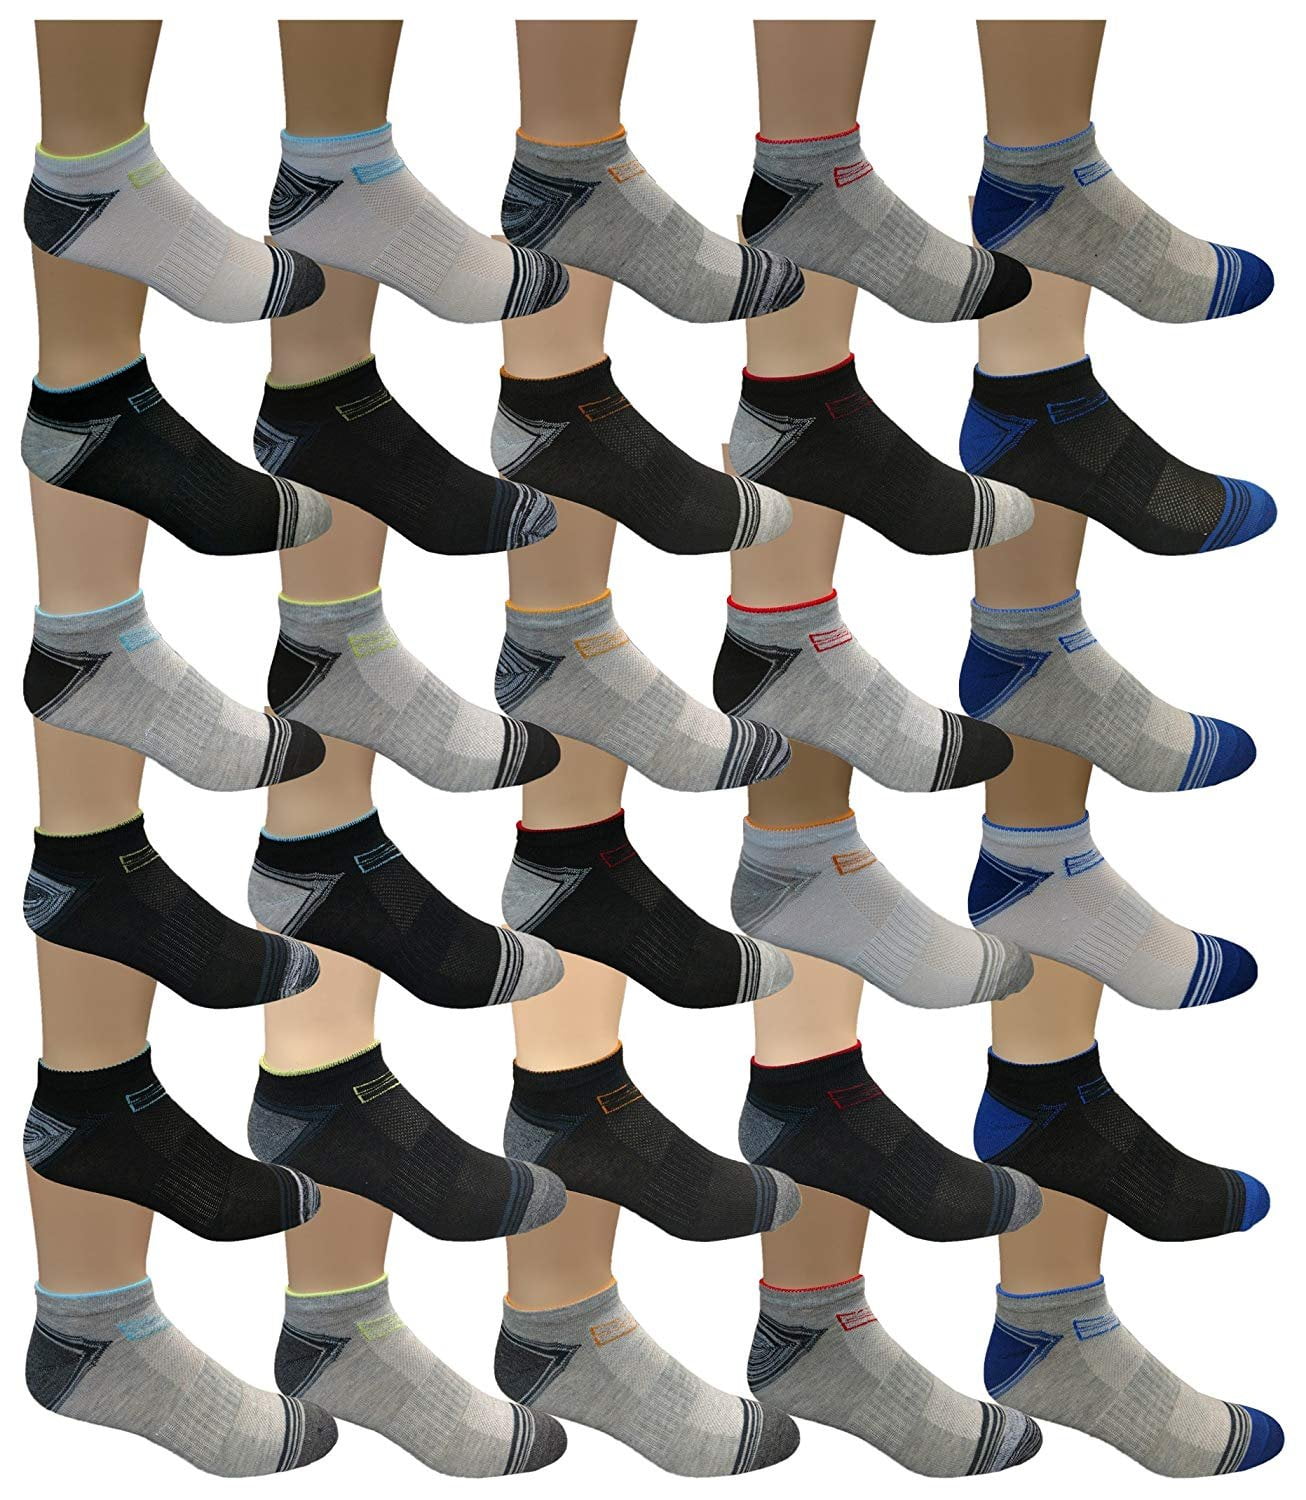 Wholesale Socks Deals - 24 Pack of Mens Sport Ankle Socks, No Show